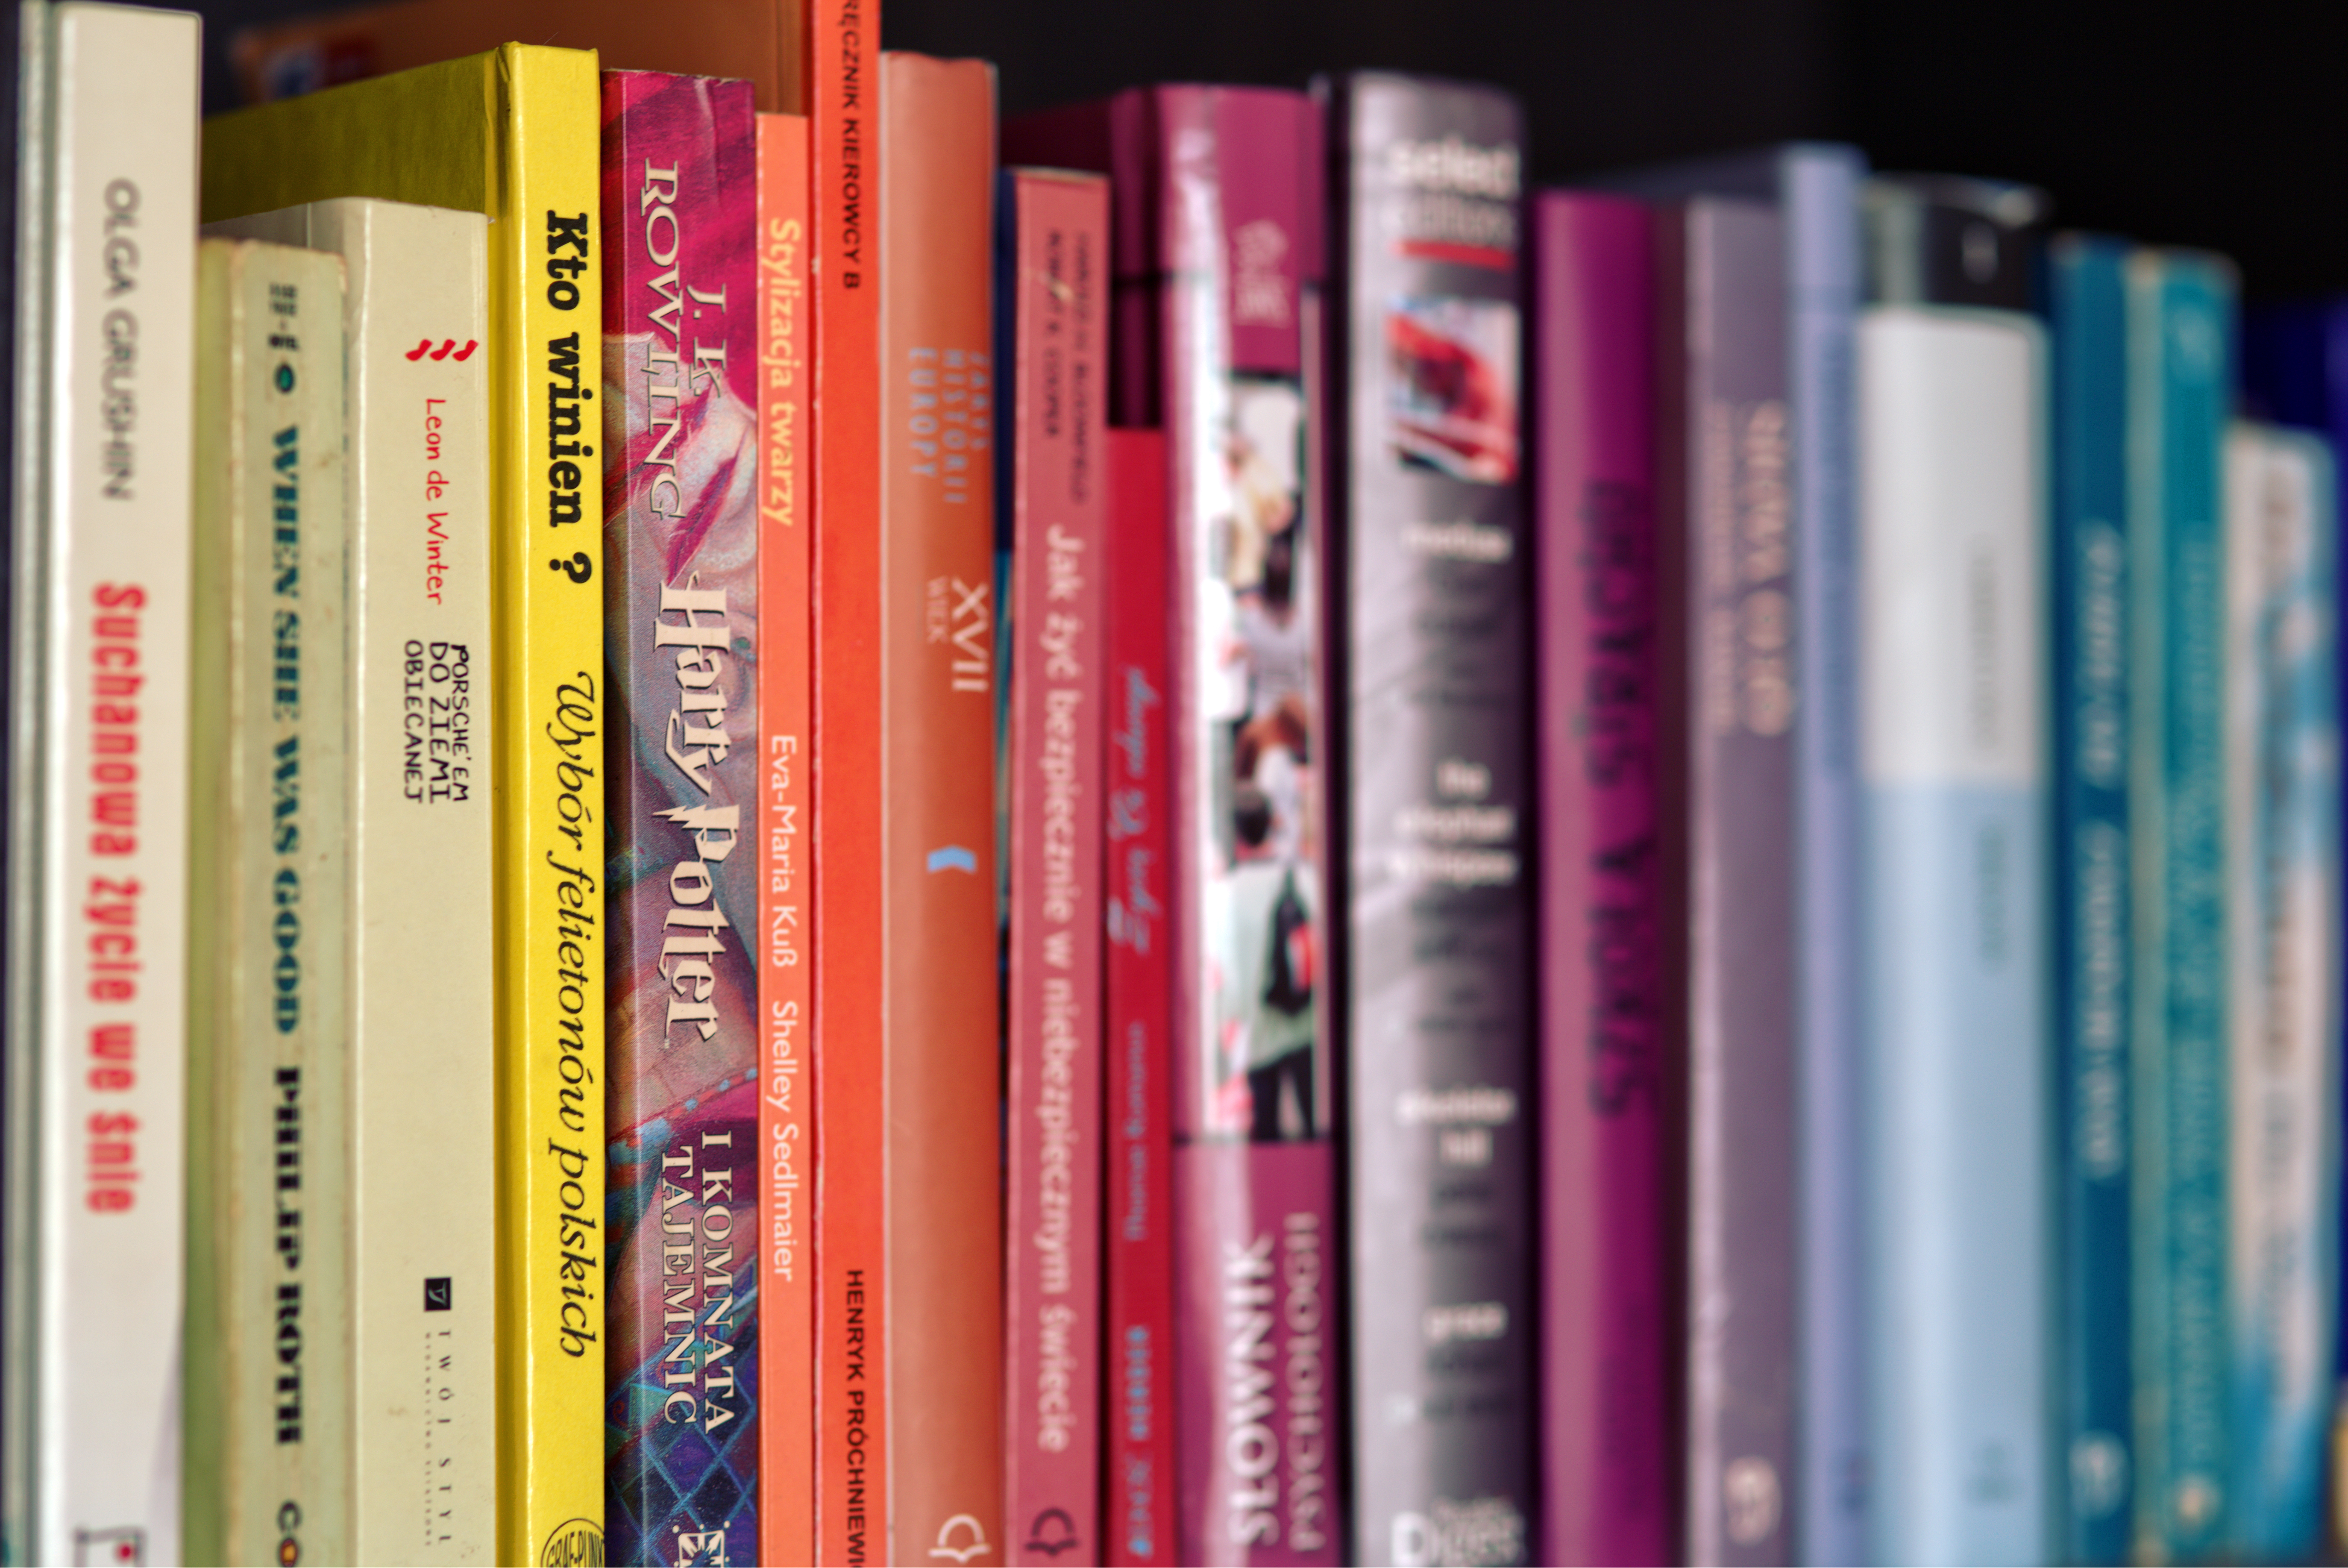 Books arranged by colour on a shelf